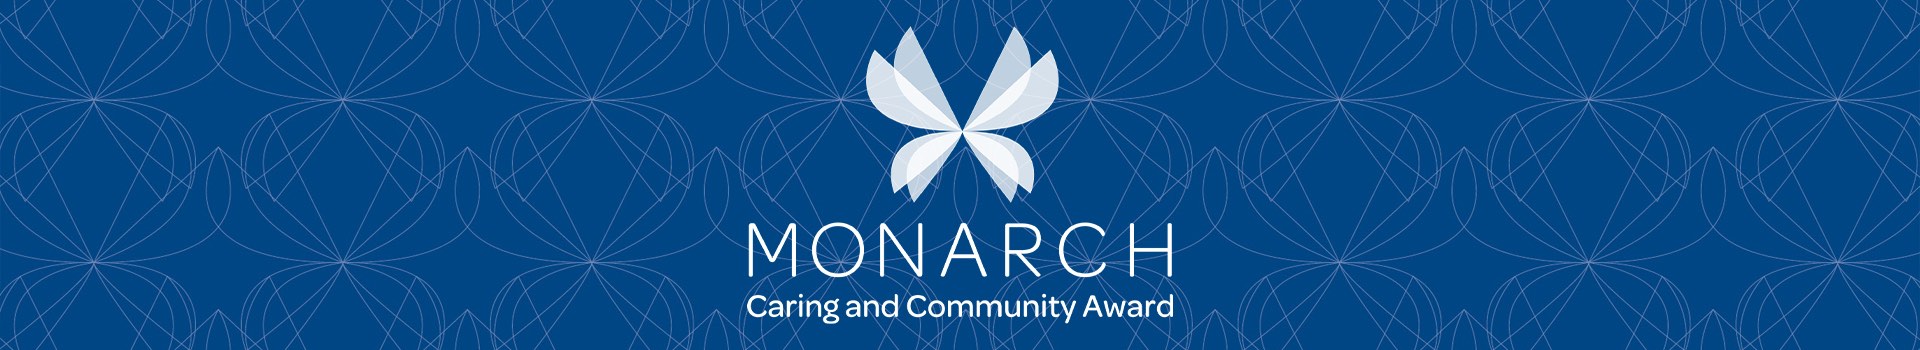 Monarch Caring Comm Award Web Banner Image